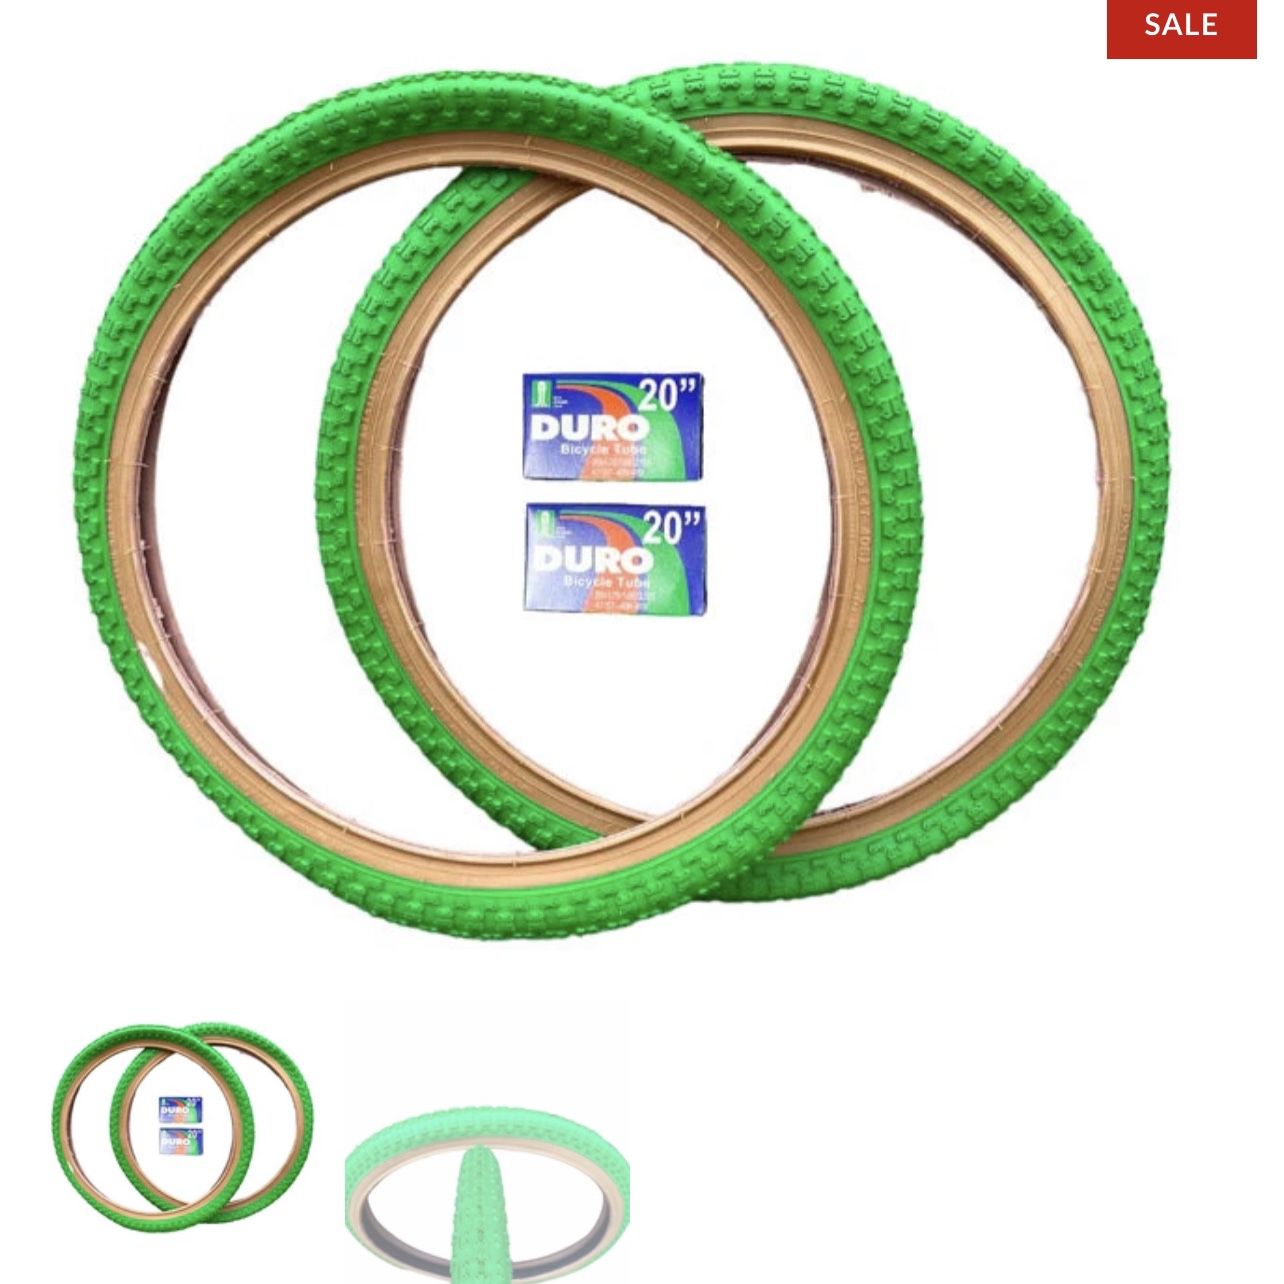 Wanda 20 x 1.75" Green Gum Wall Tires $35.99 Free inner tubes!!!!!